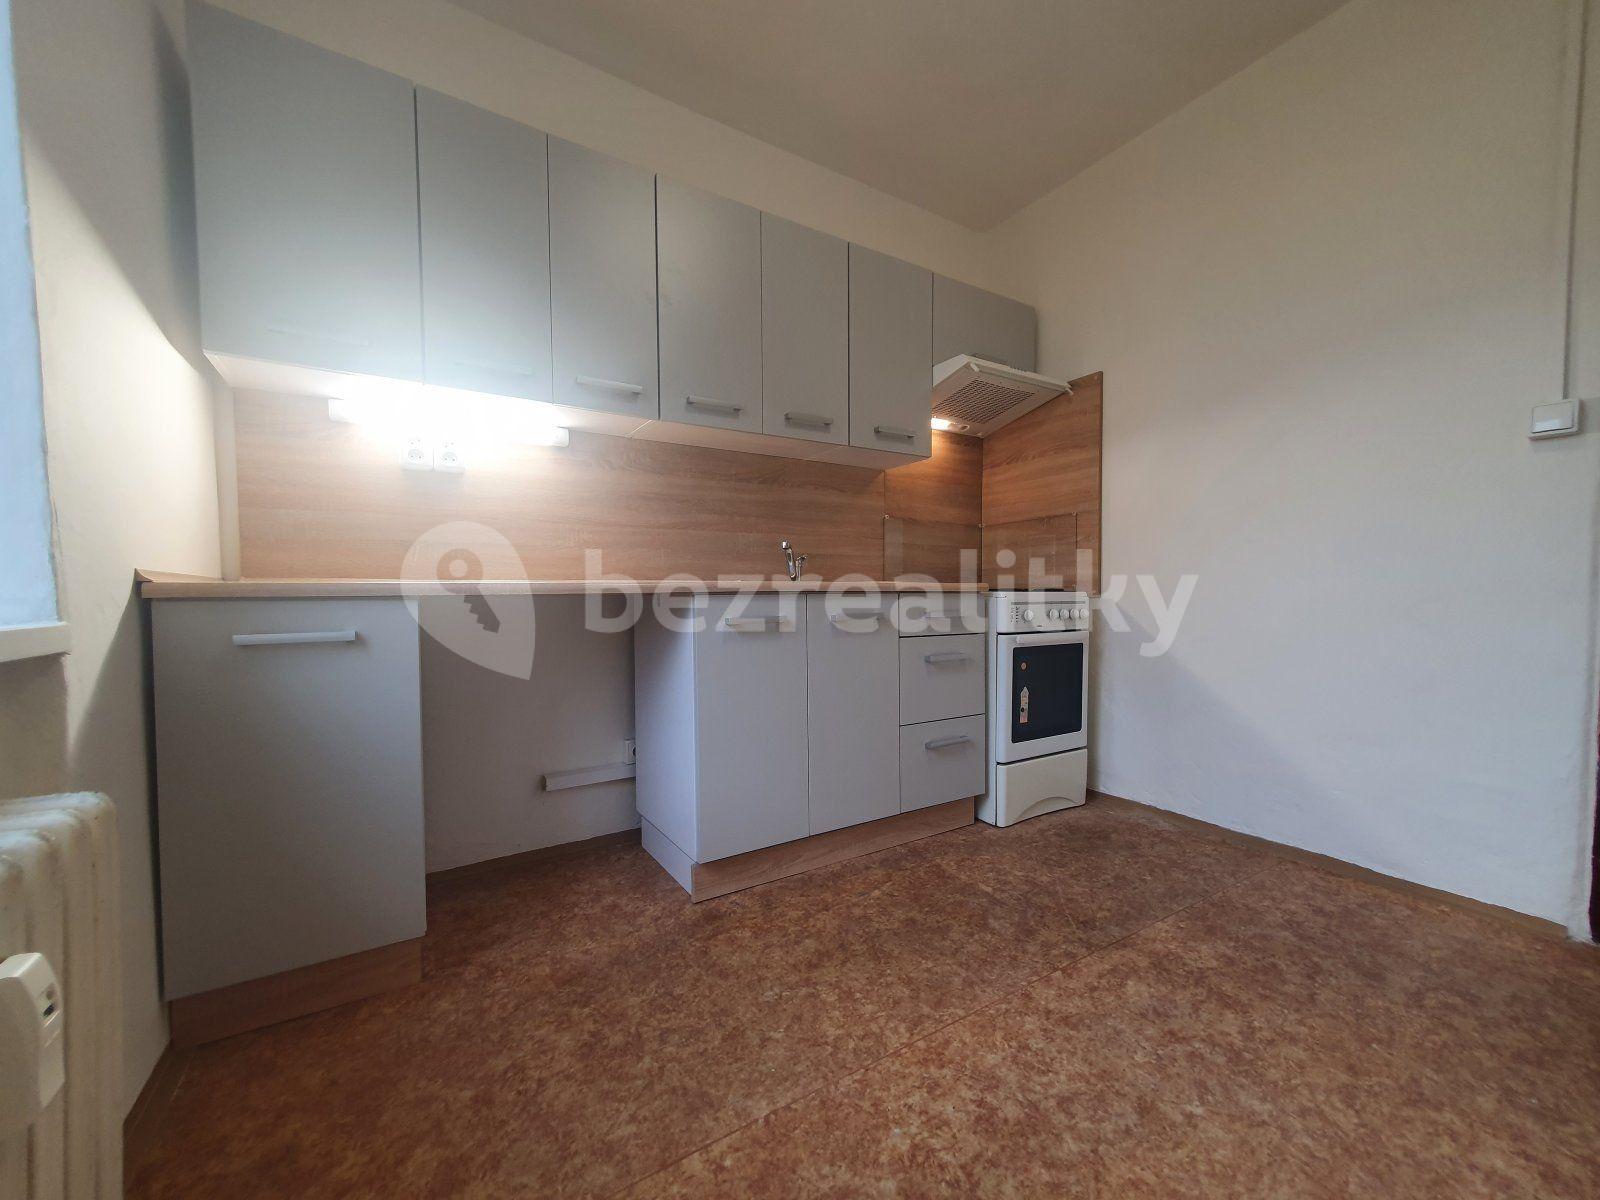 2 bedroom flat to rent, 50 m², Hornická, Albrechtice, Moravskoslezský Region